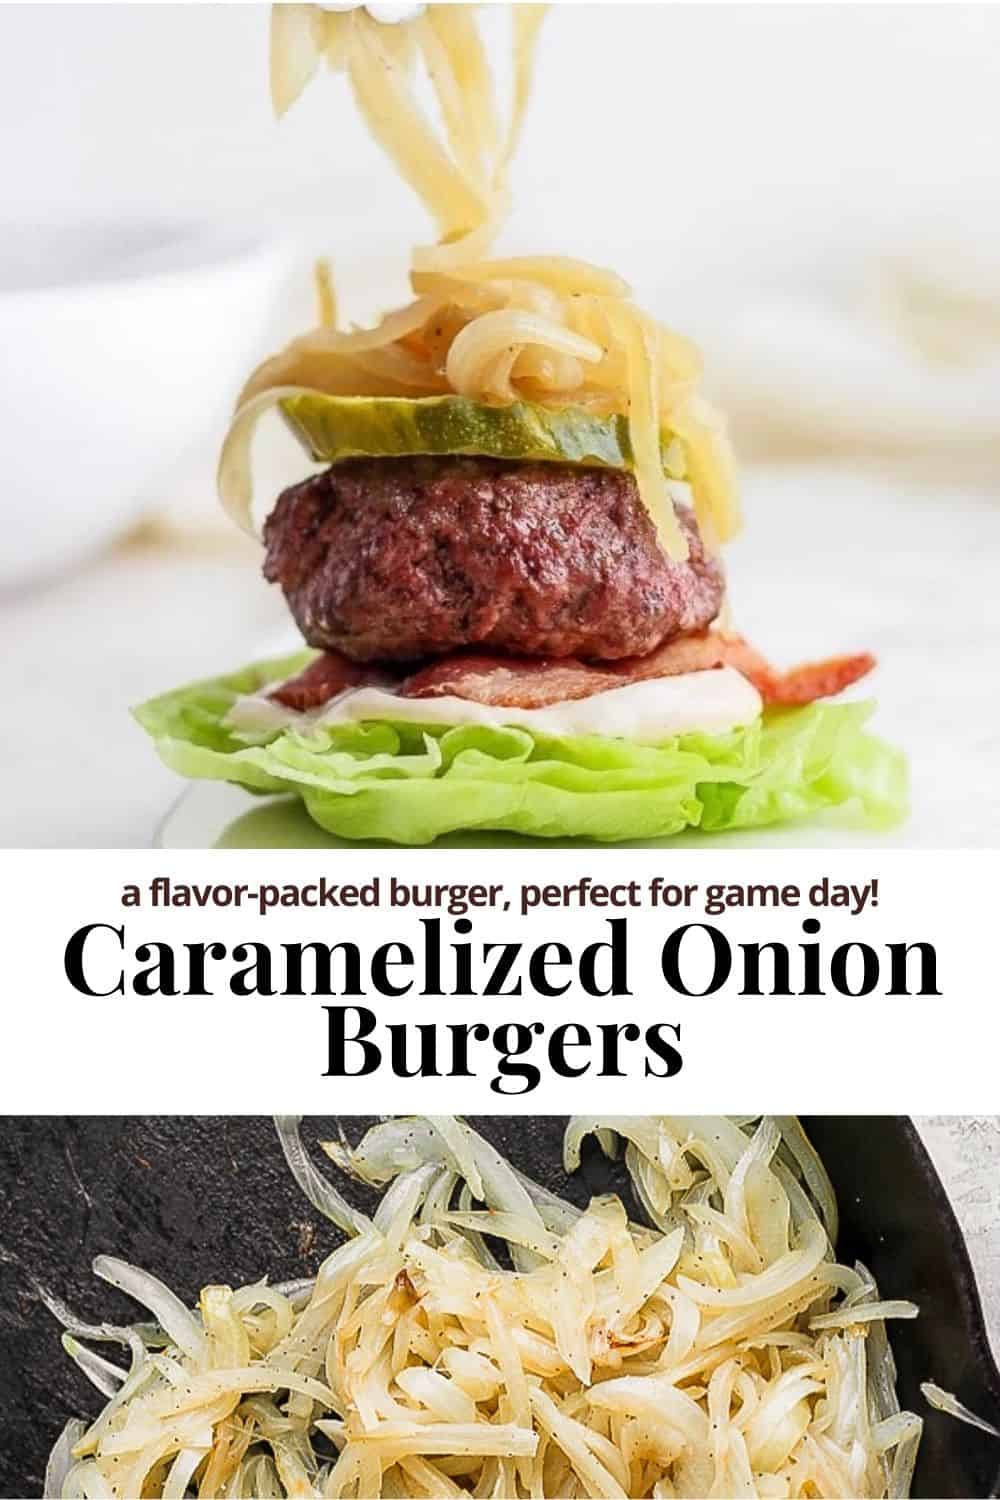 Pinterest image for caramelized onion burgers.